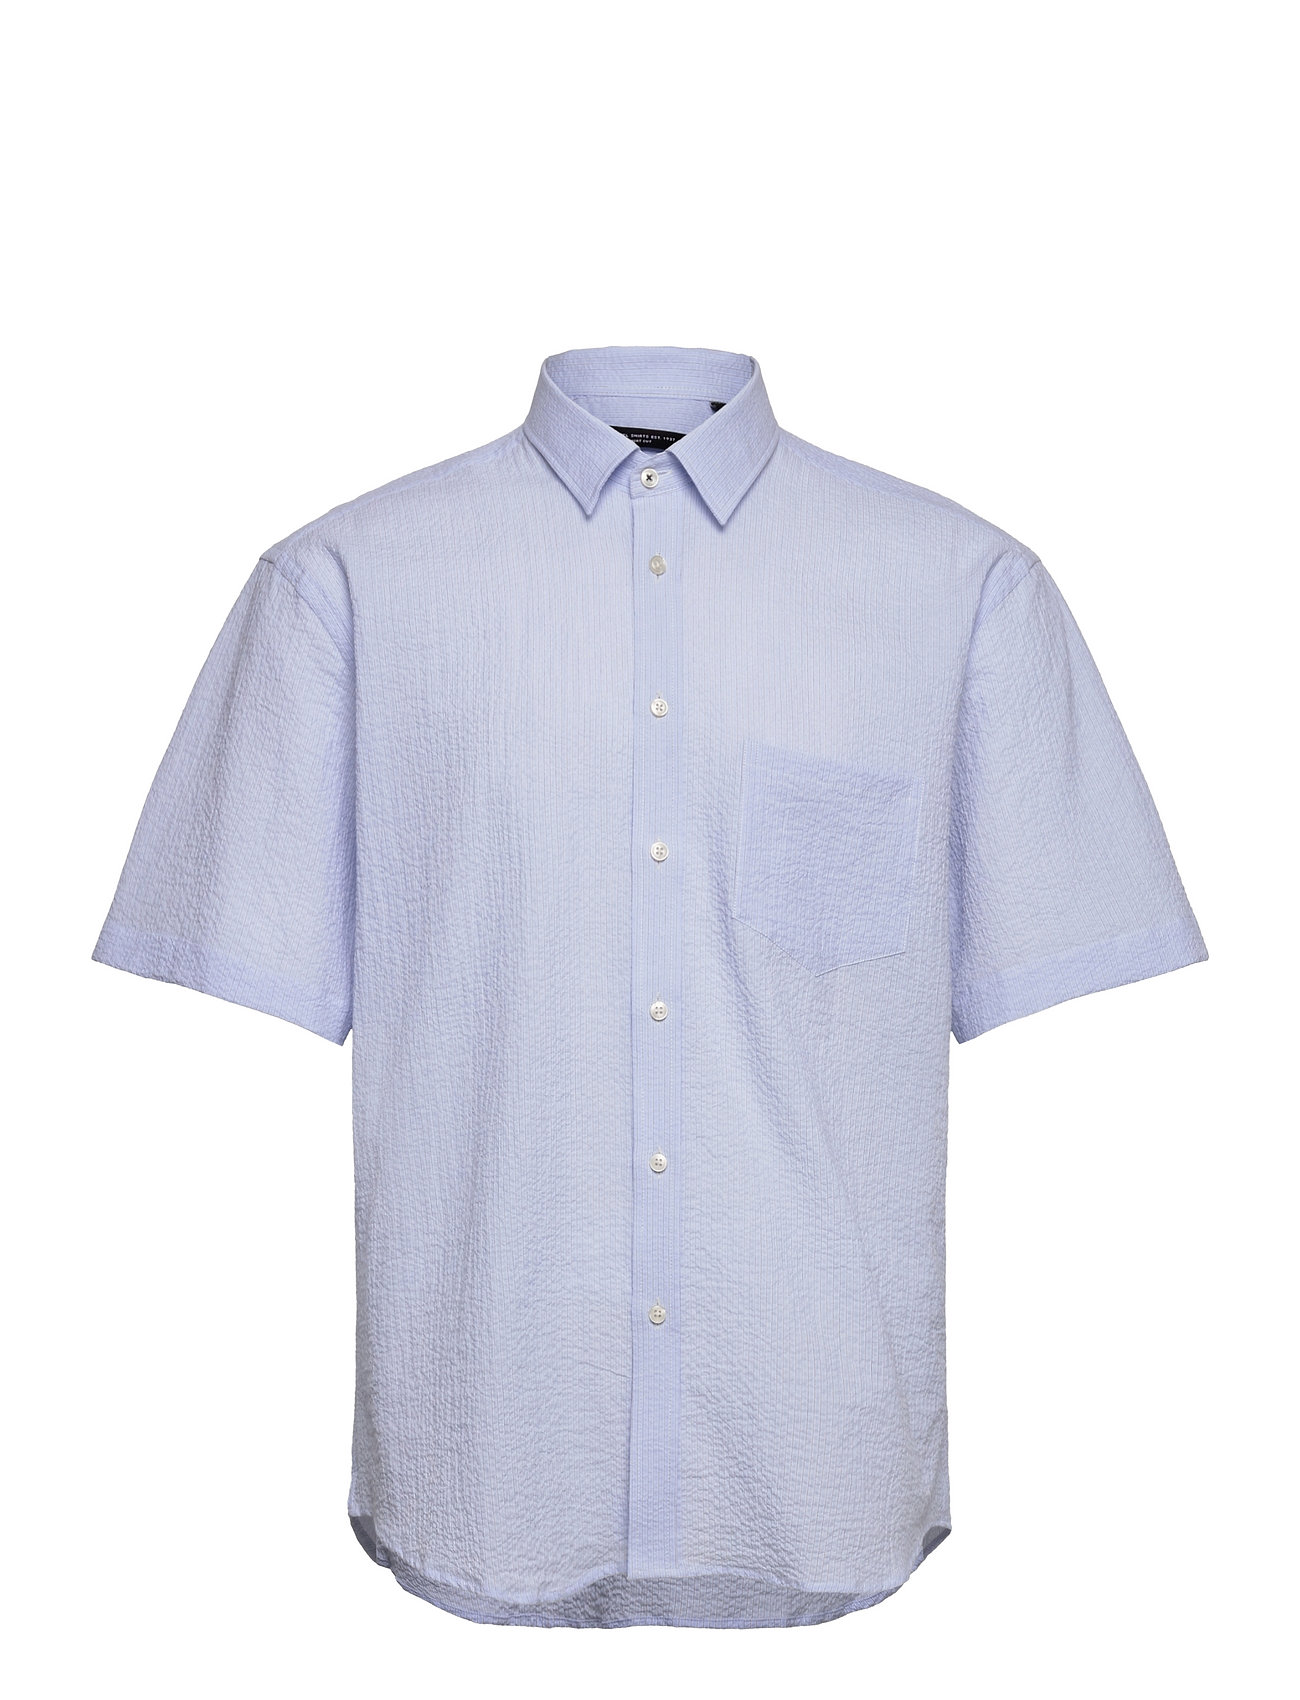 Bosweel Shirts Est. 1937 Regular Fit Men Shirt Blue Bosweel Shirts Est. 1937